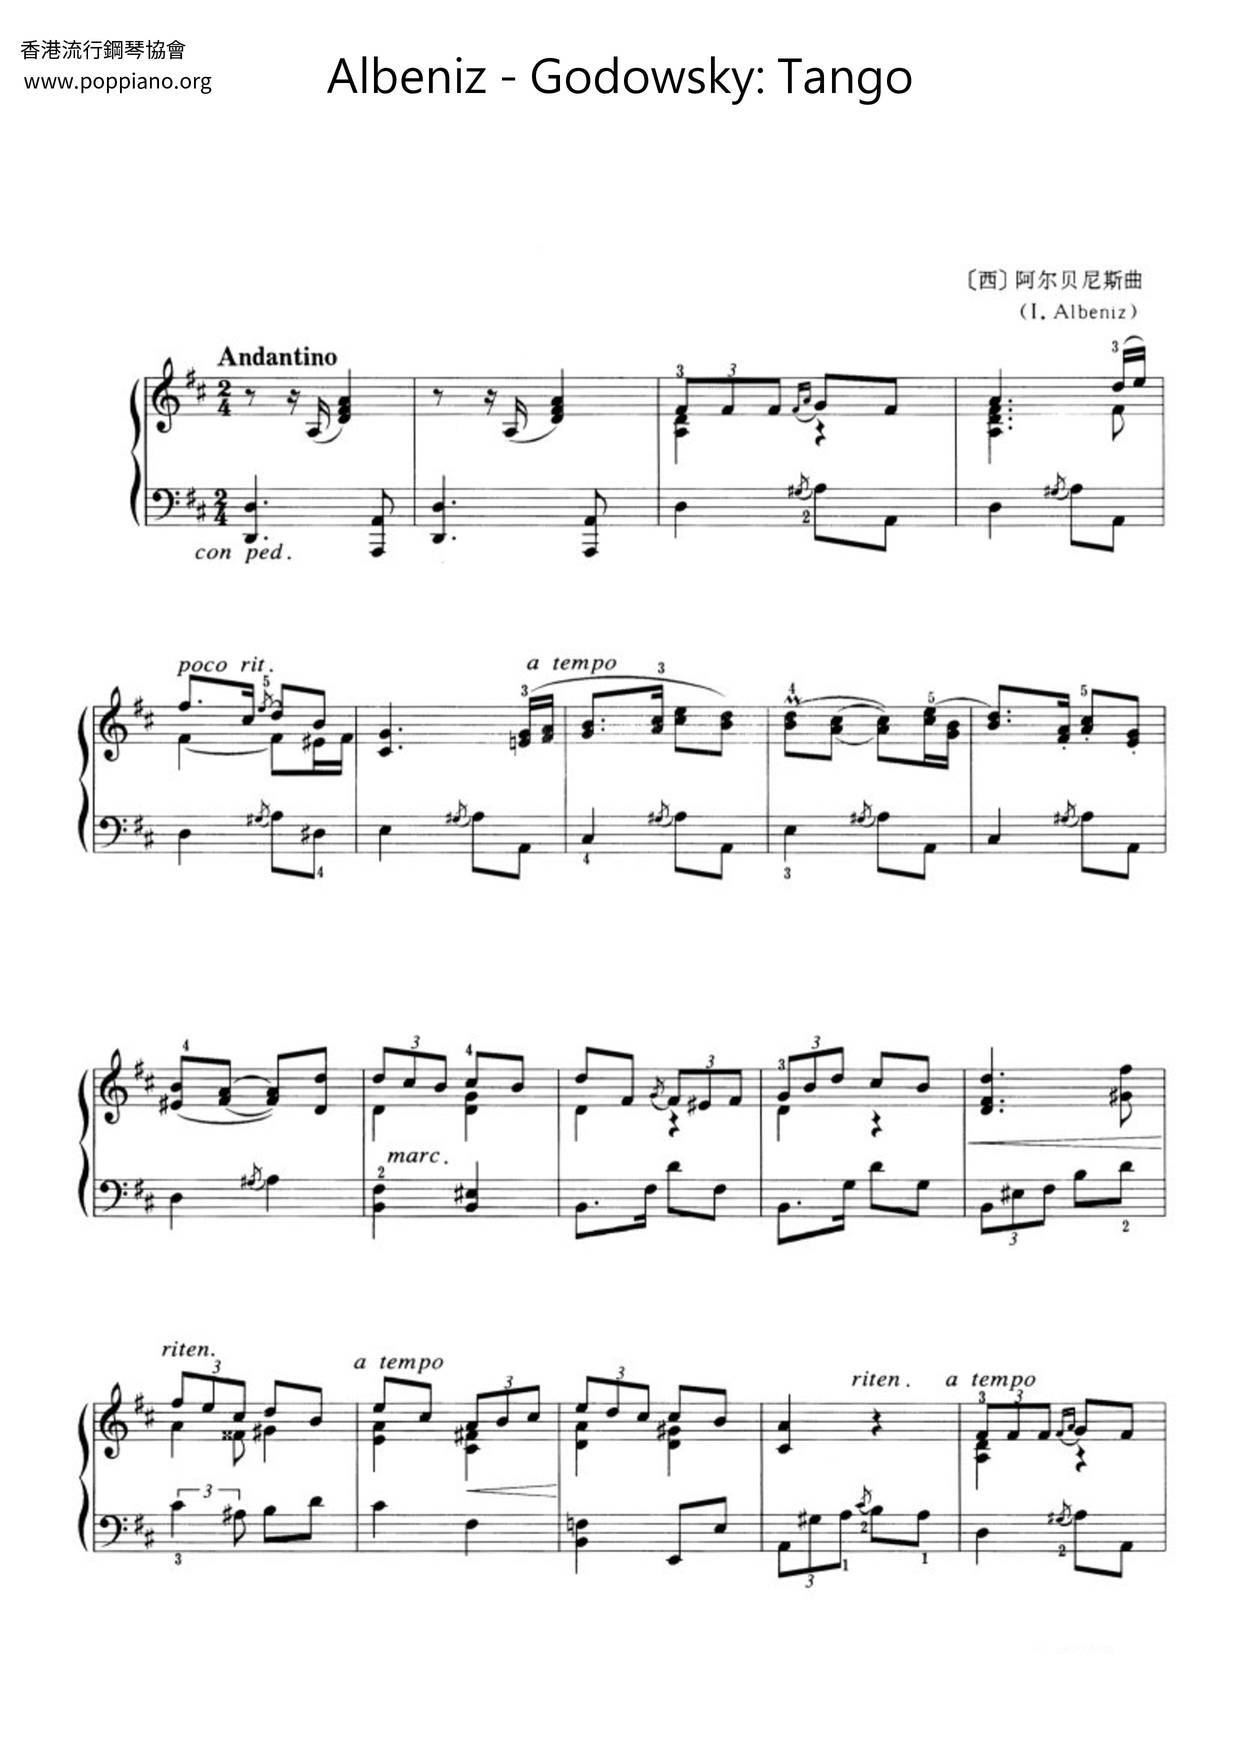 Godowsky: Tangoピアノ譜